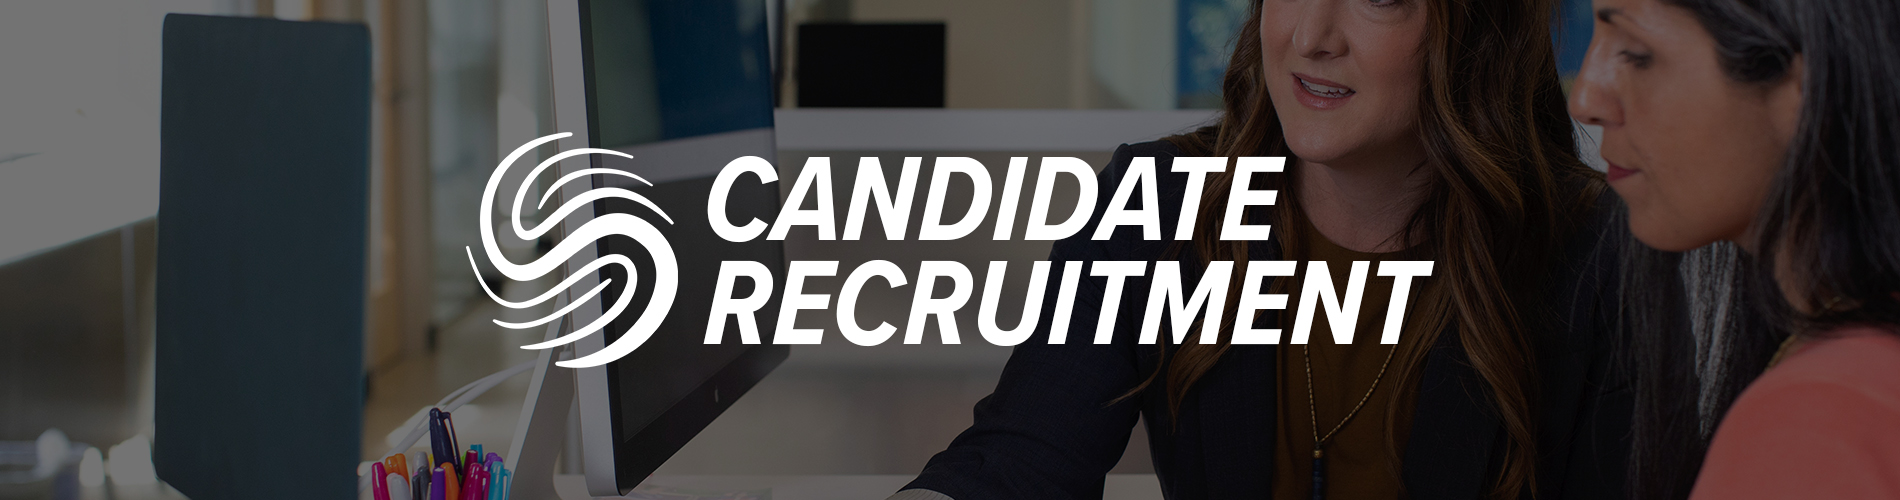 Candidate Recruitment Process, Professional Staffing in Phoenix, AZ